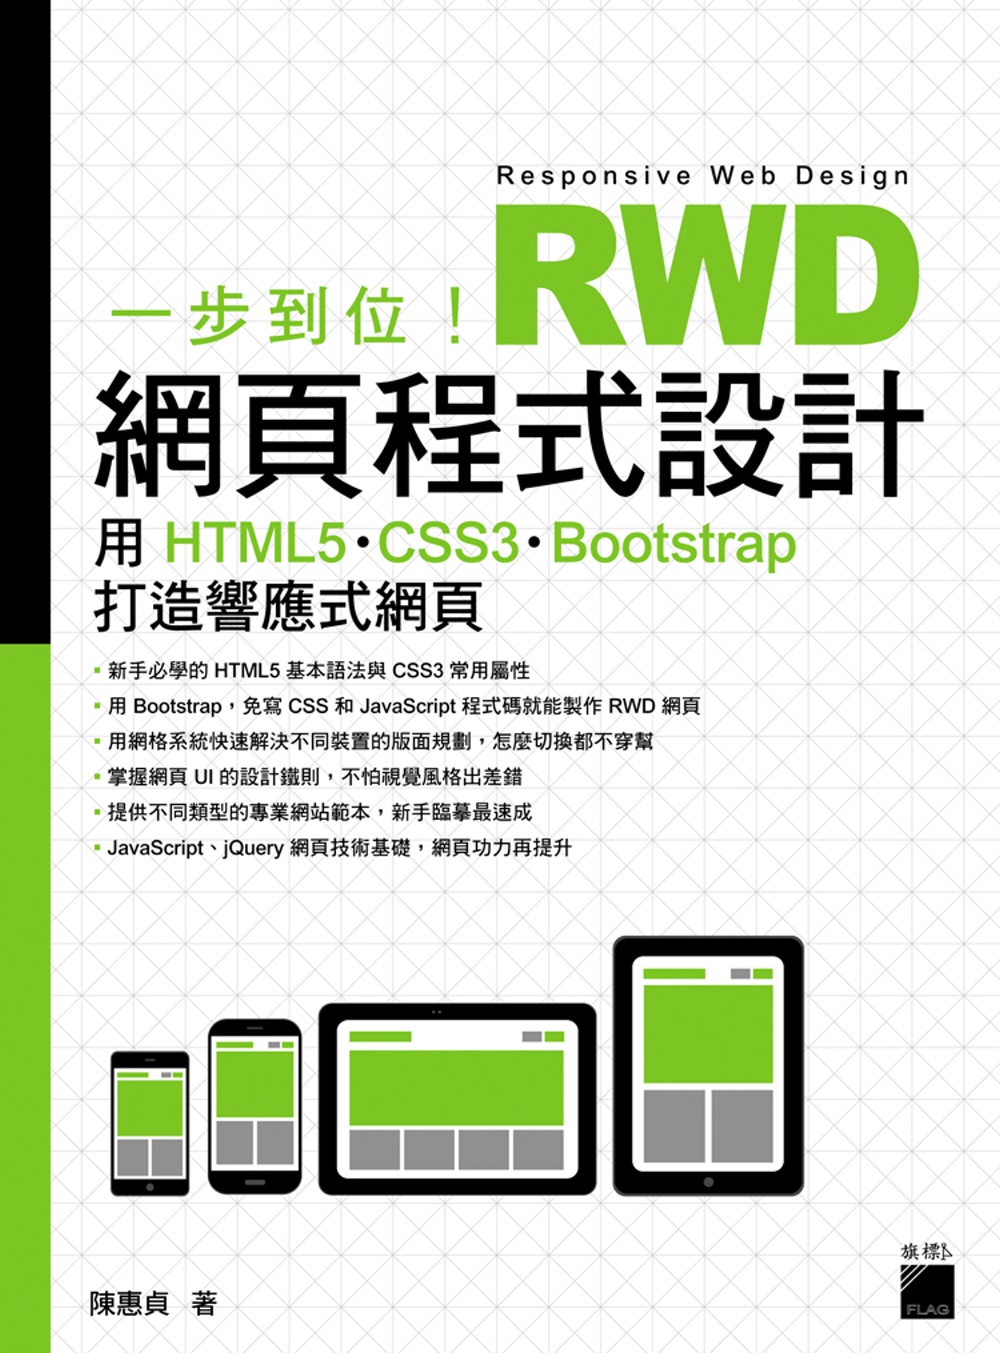 一步到位！RWD 網頁程式設計：用 HTML5、CSS3、Bootstrap 打造響應式網頁